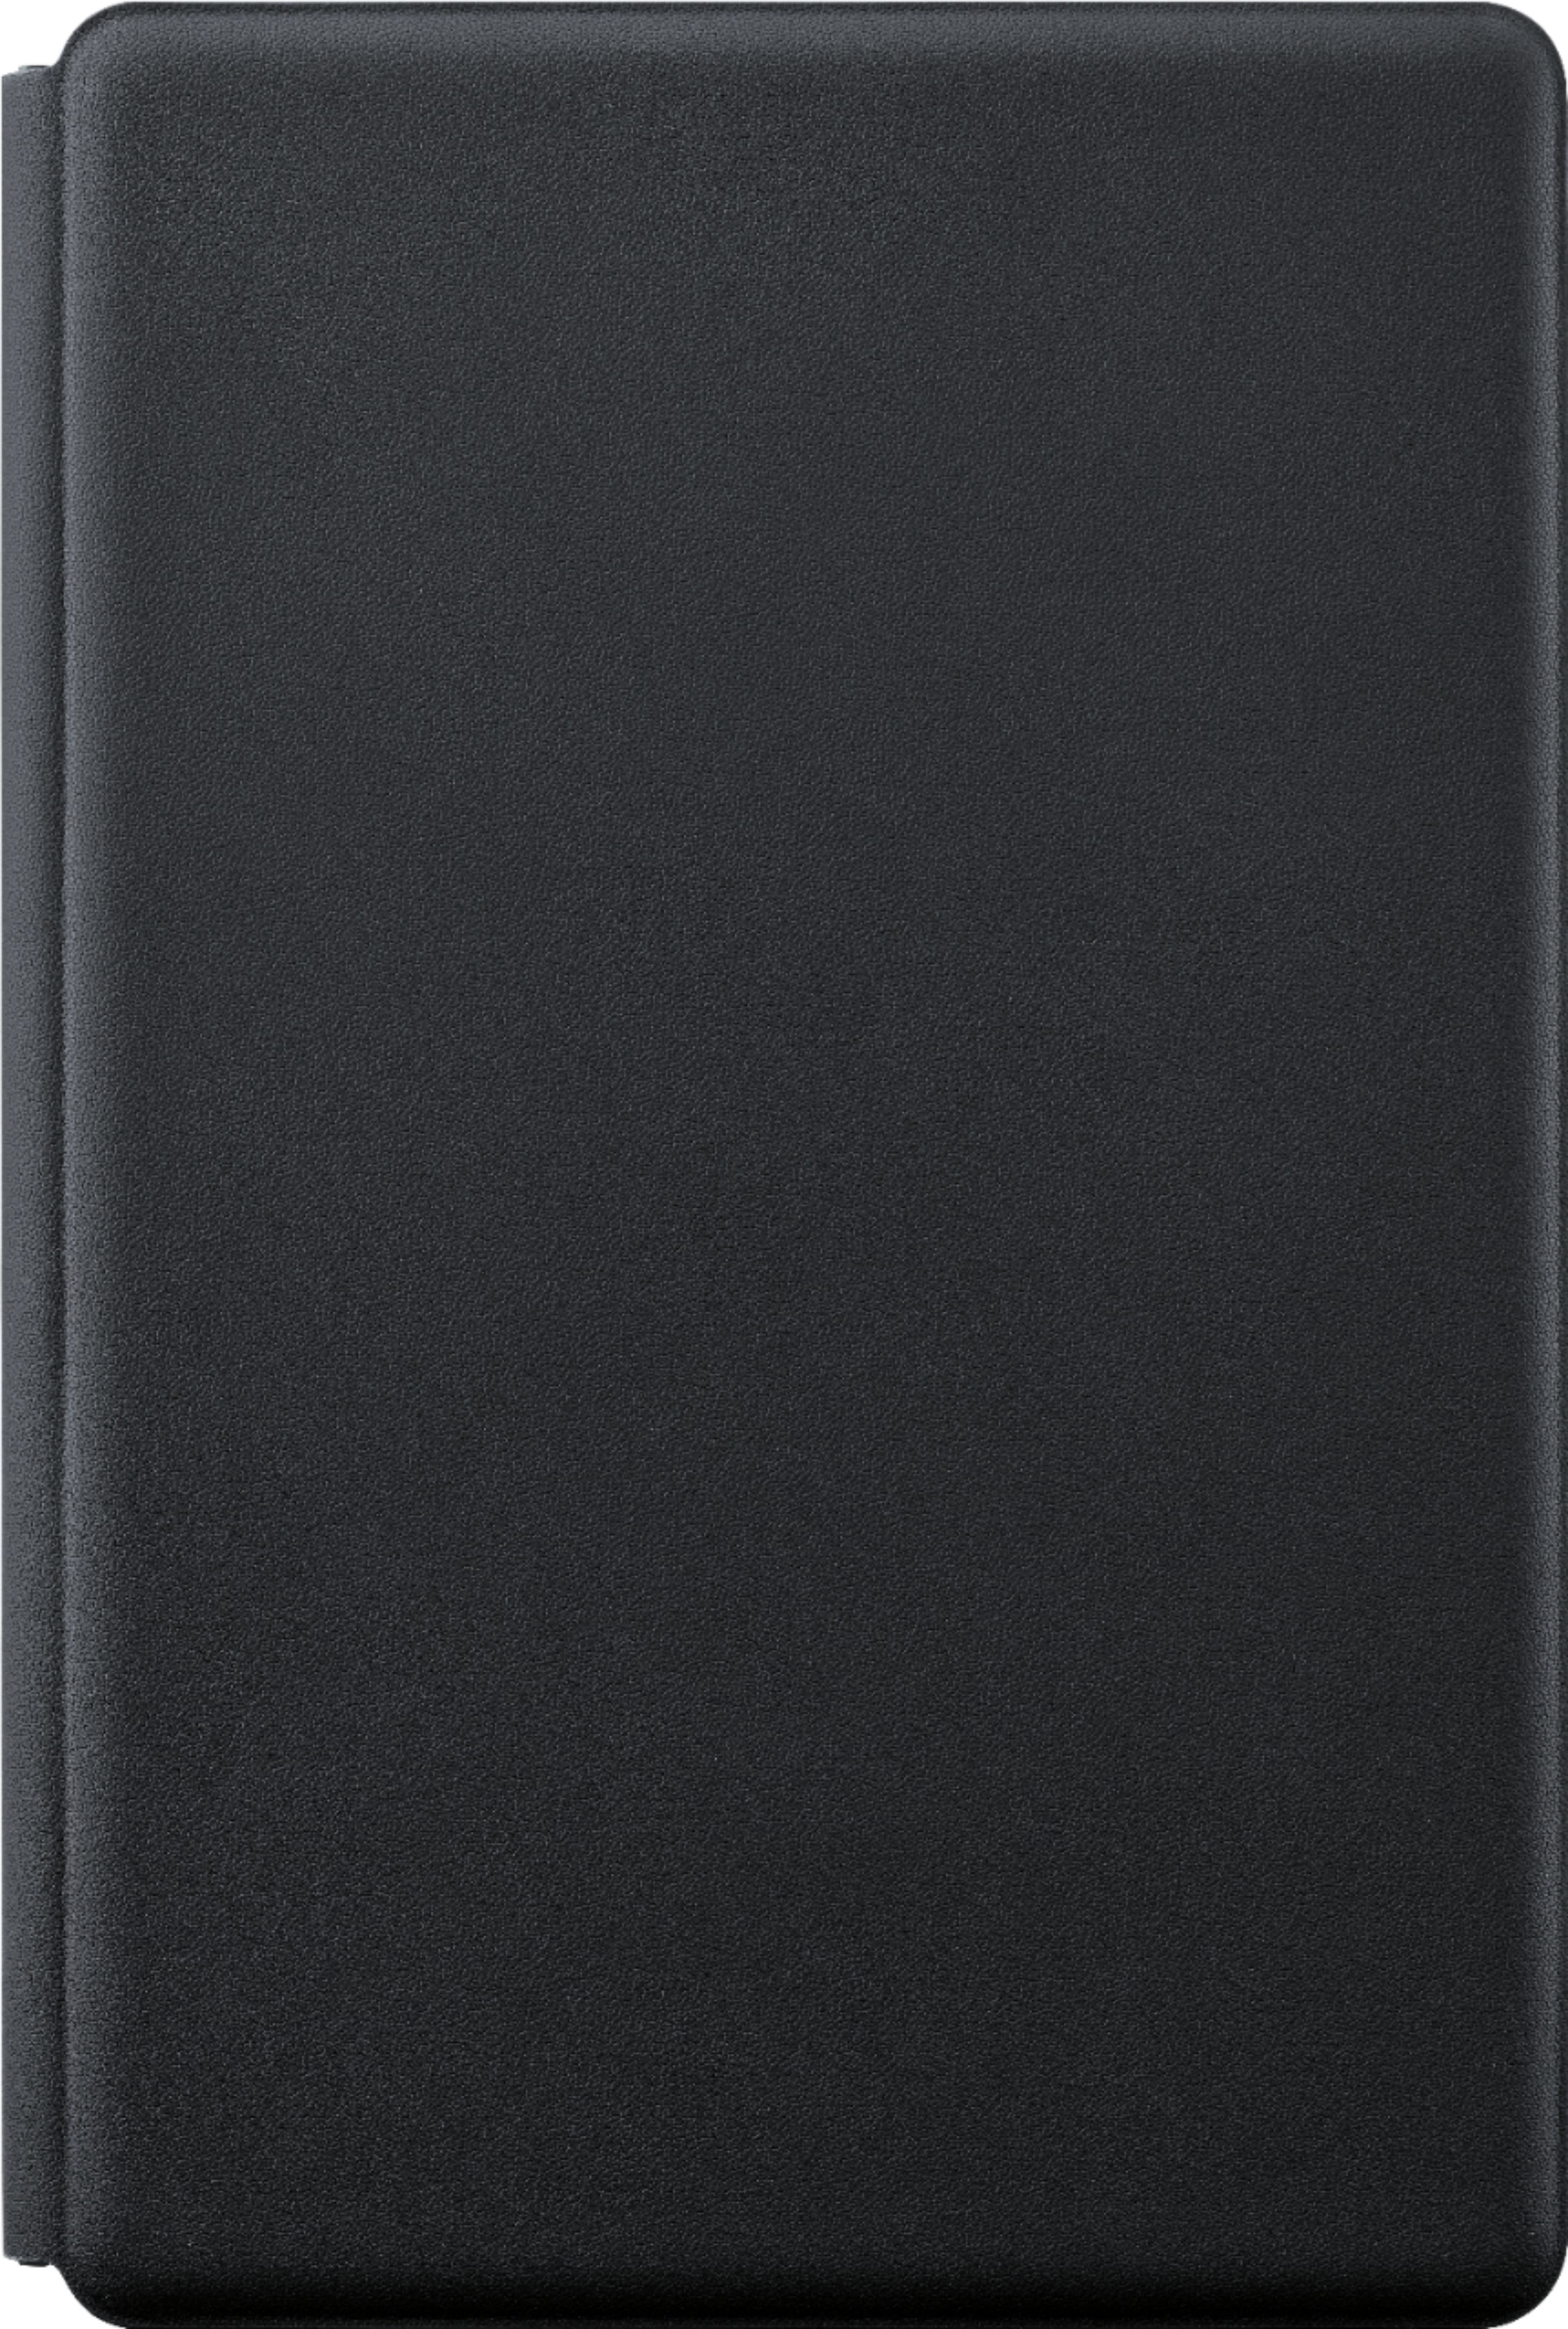 Samsung - Galaxy tab S7 Book Cover - EF-BT870PBEGUJ - Black